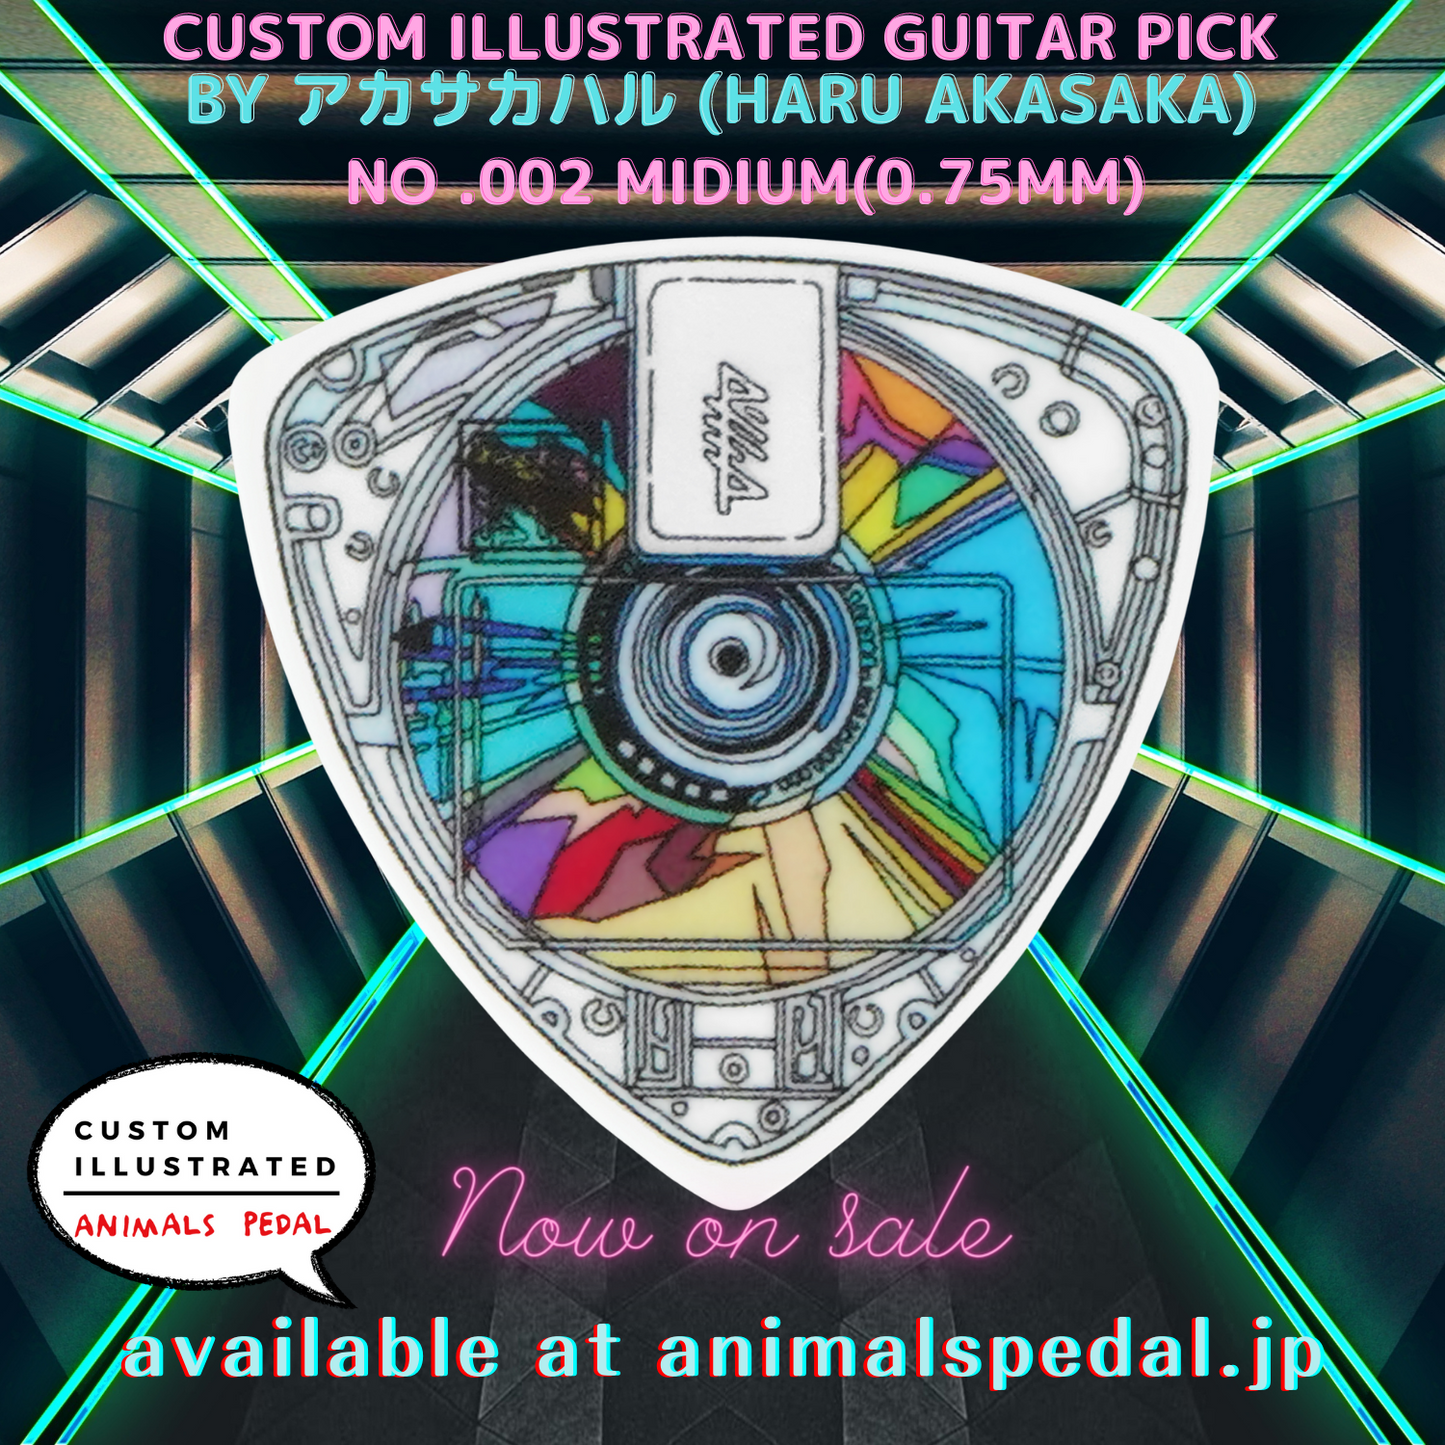 Animals Pedal Custom Illustrated Pick by アカサカハル